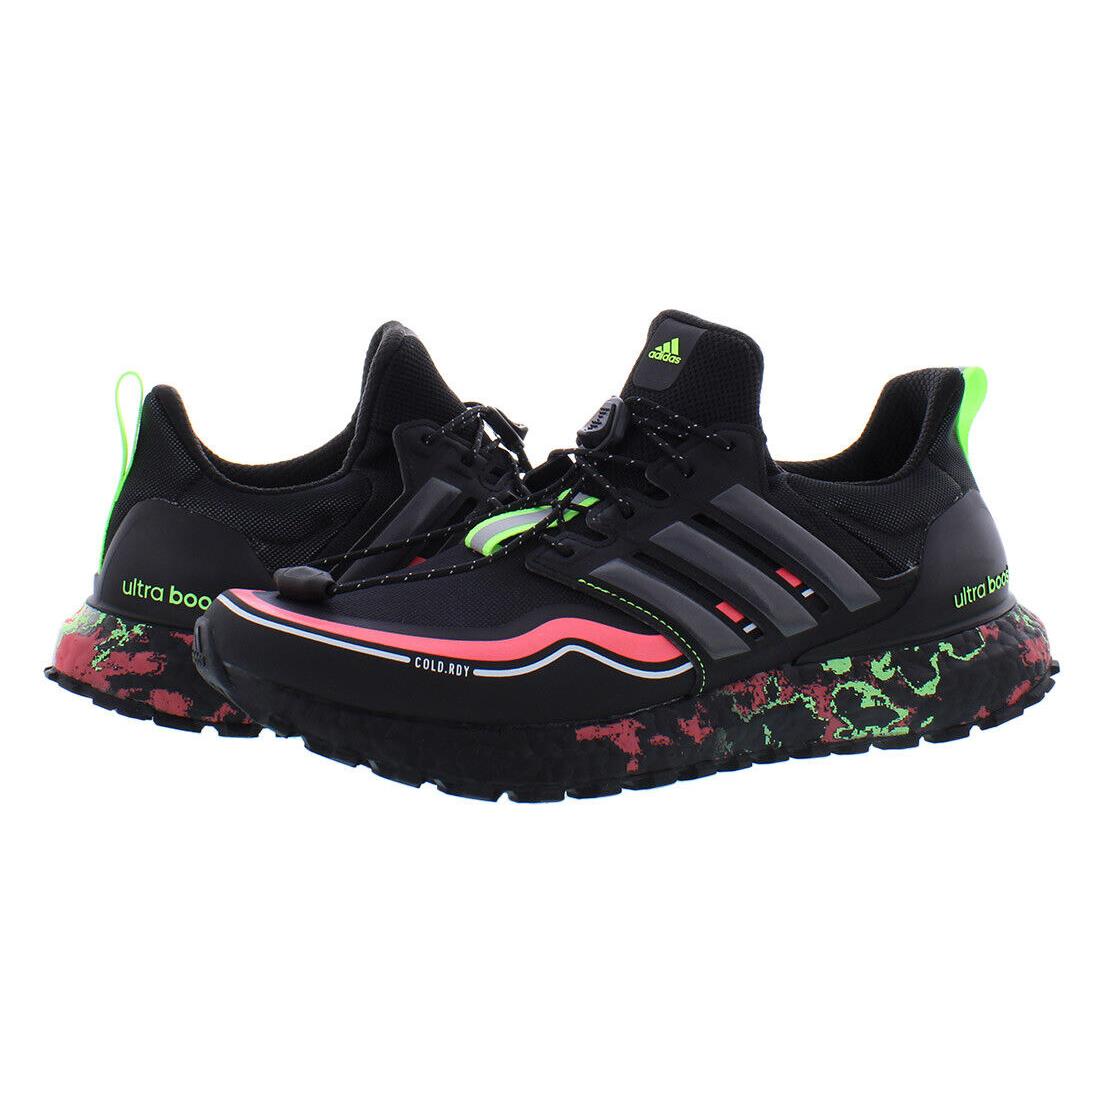 Adidas Ultraboost C.rdy Dna Mens Shoes - Black/Multicolor, Main: Black